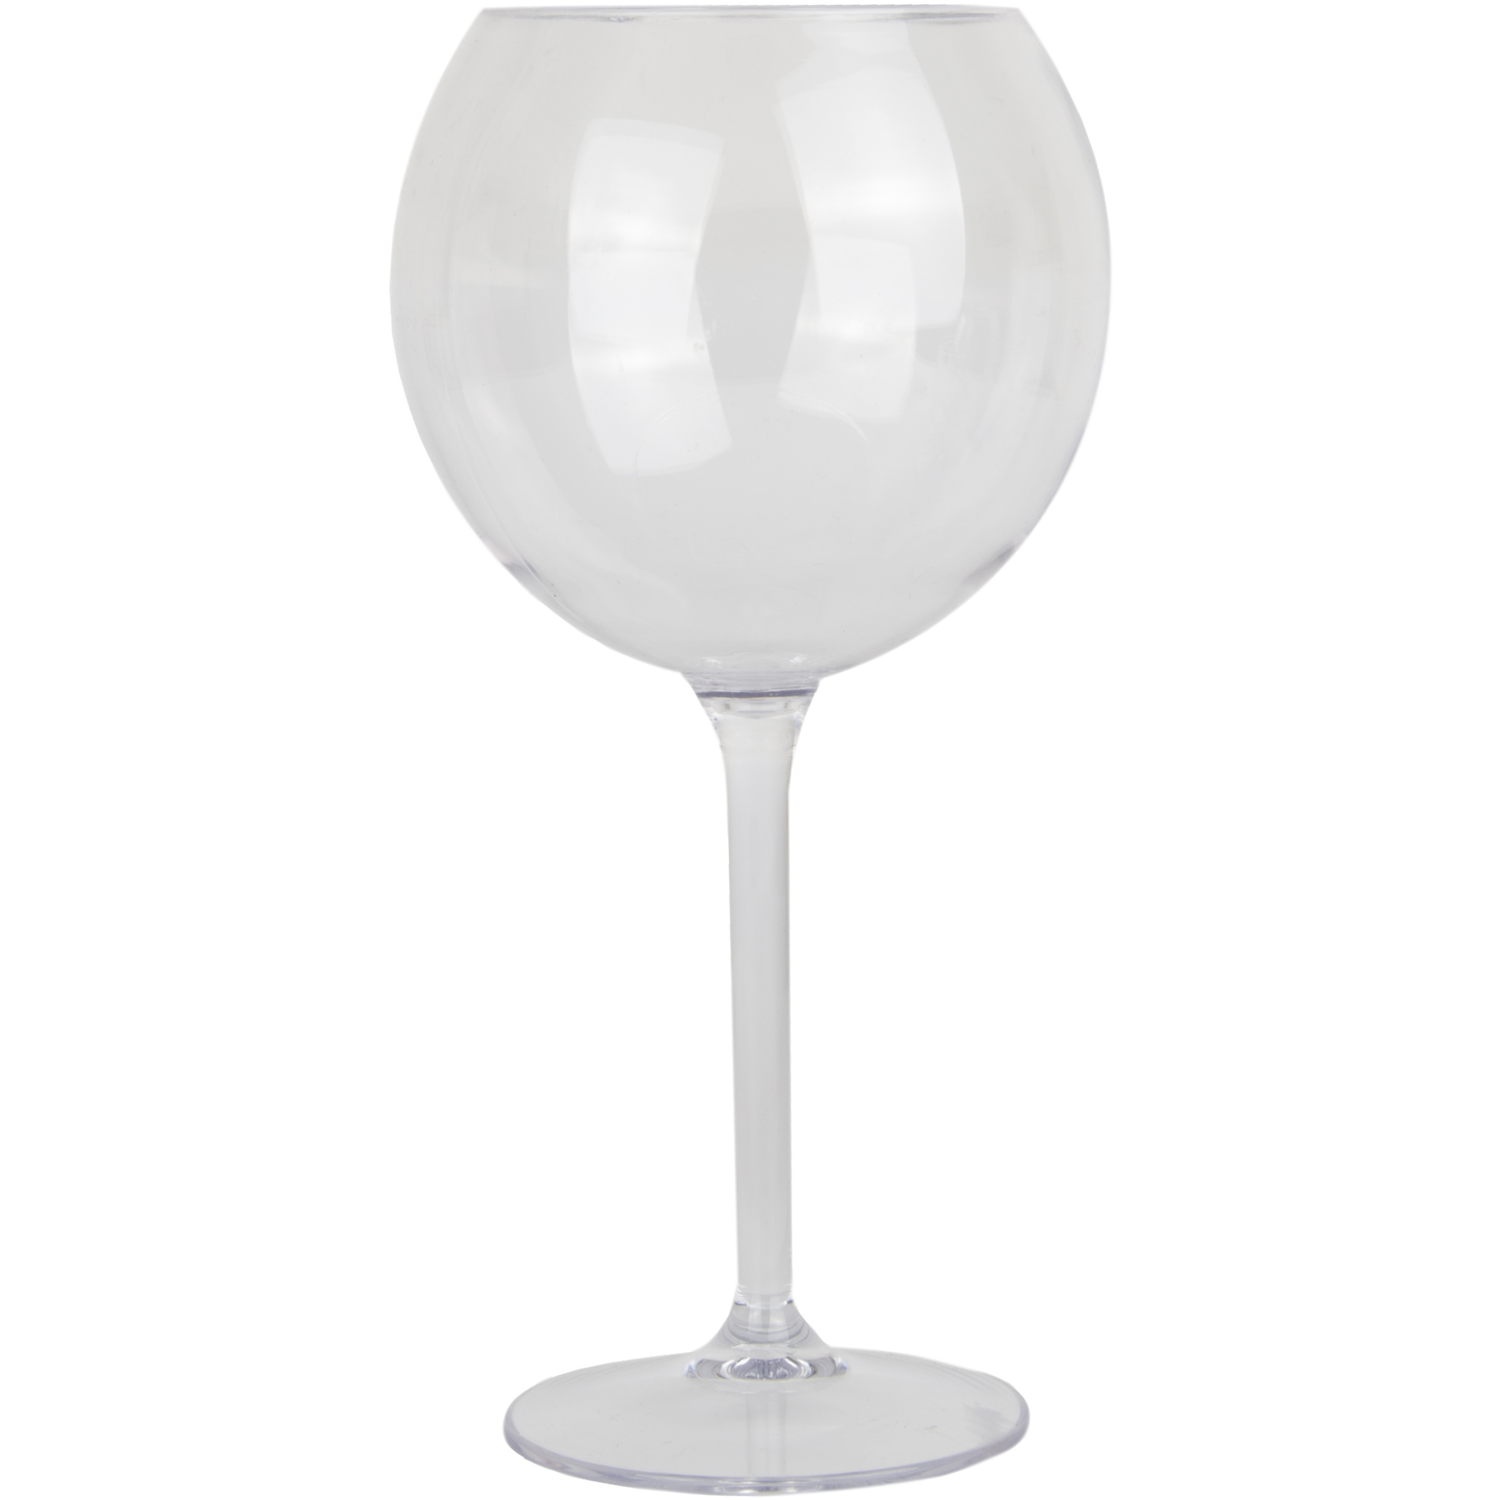 Depa® Glas, wijnglas, reusable, pETG, 650ml, transparant 1